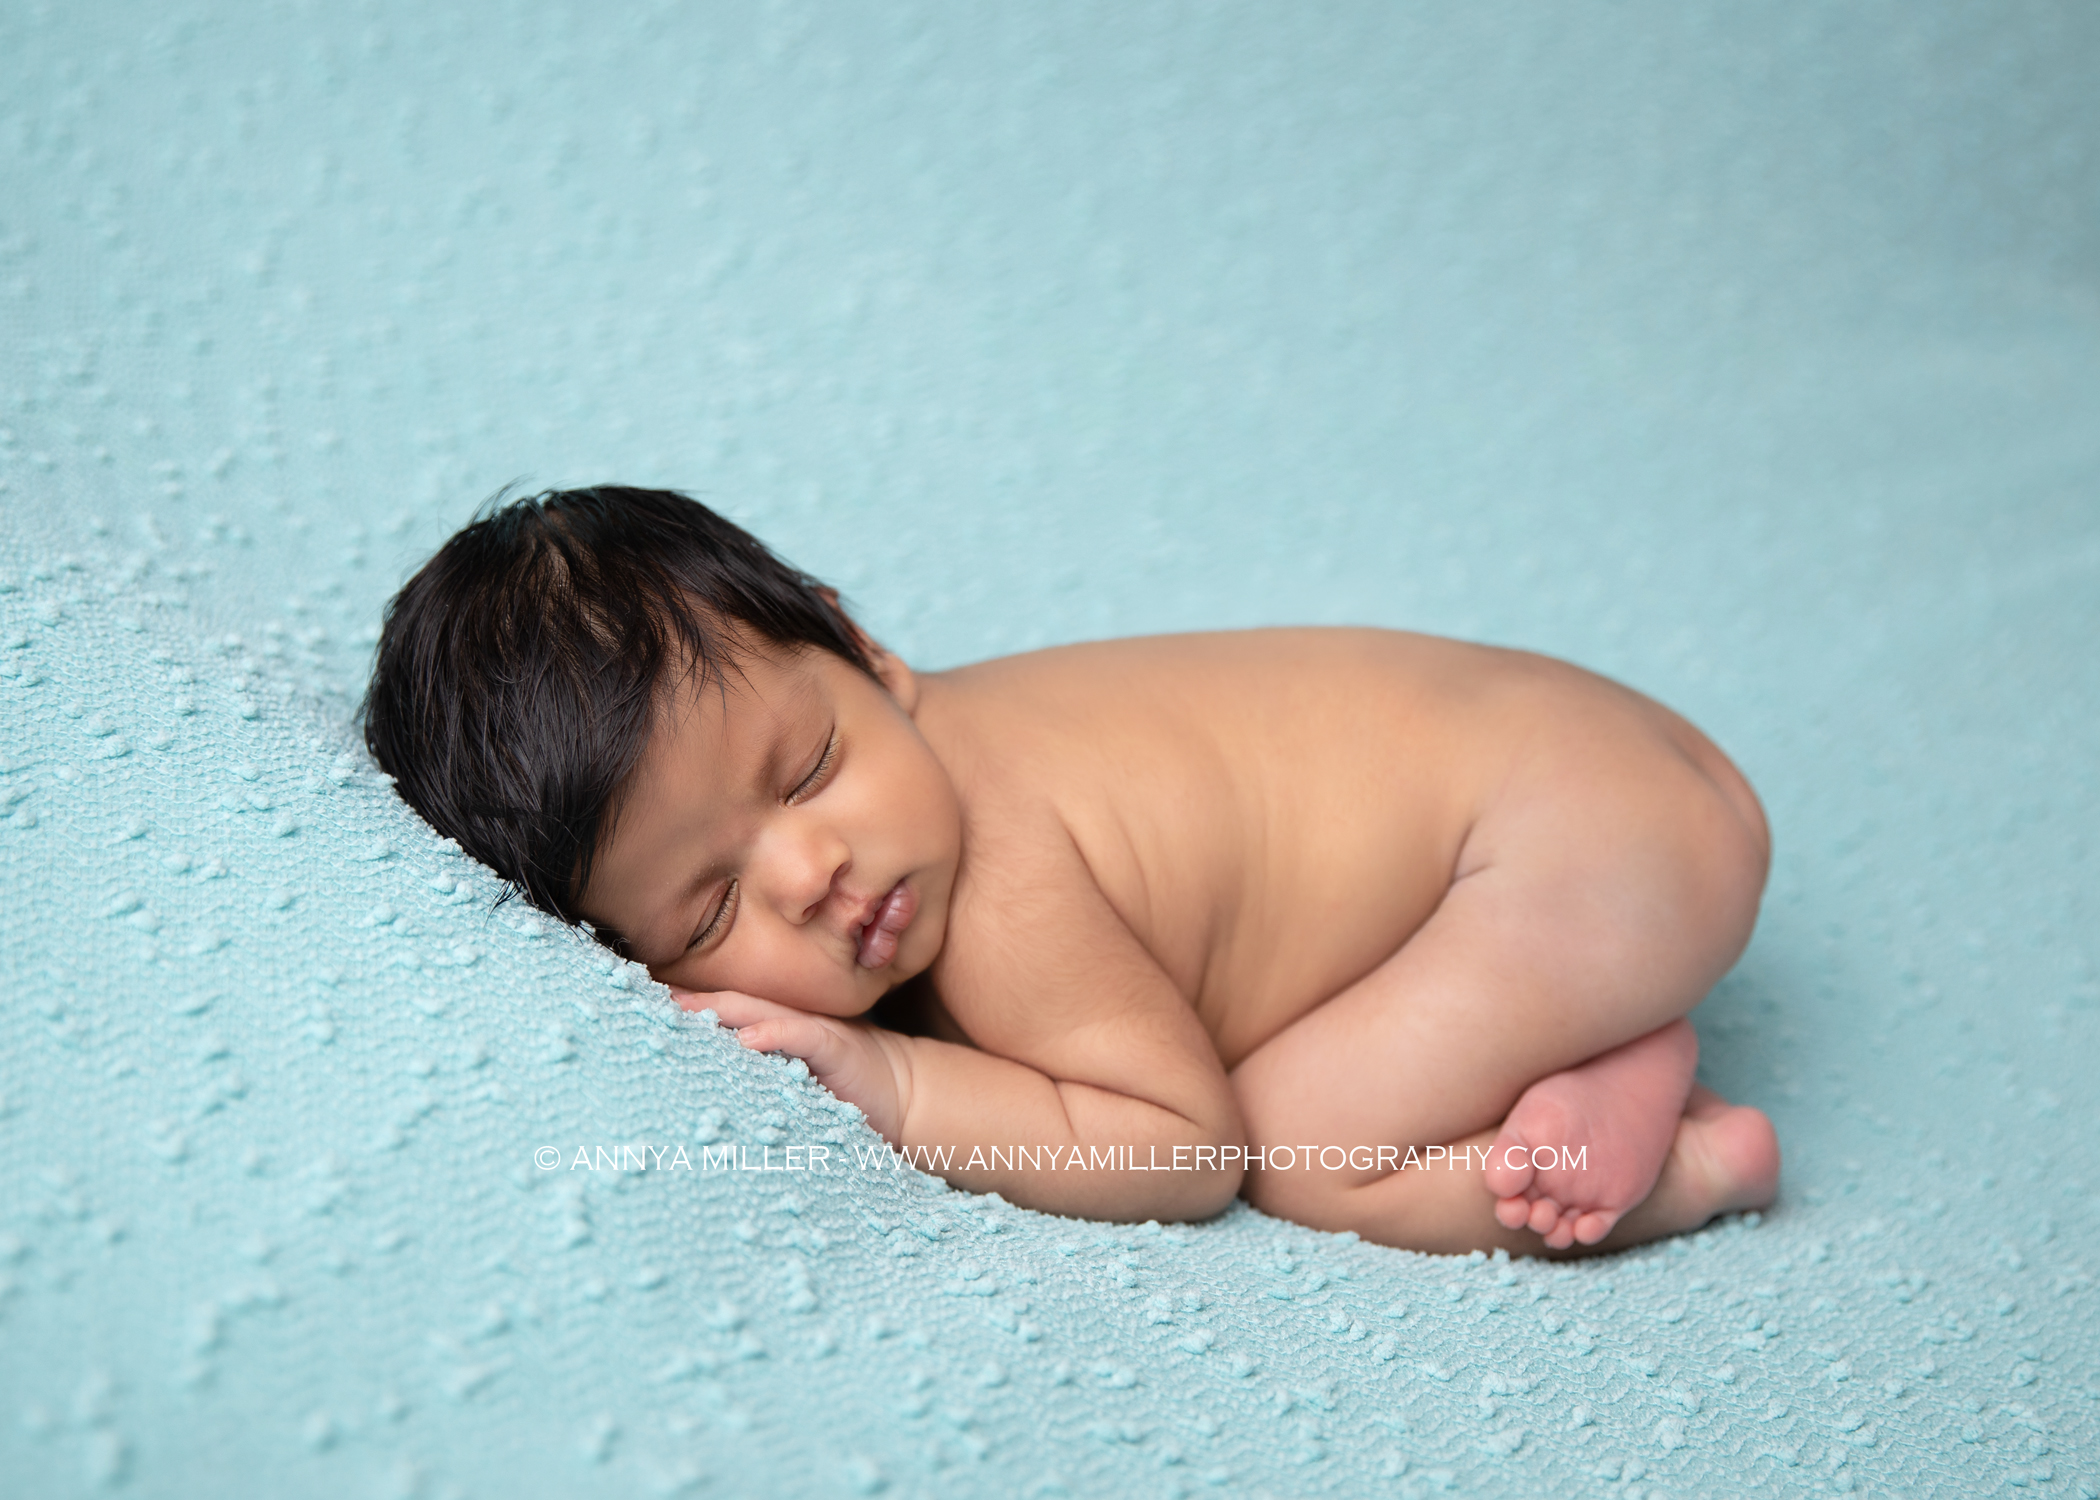 Durham newborn photos of baby boy sleeping by Annya Miller photography